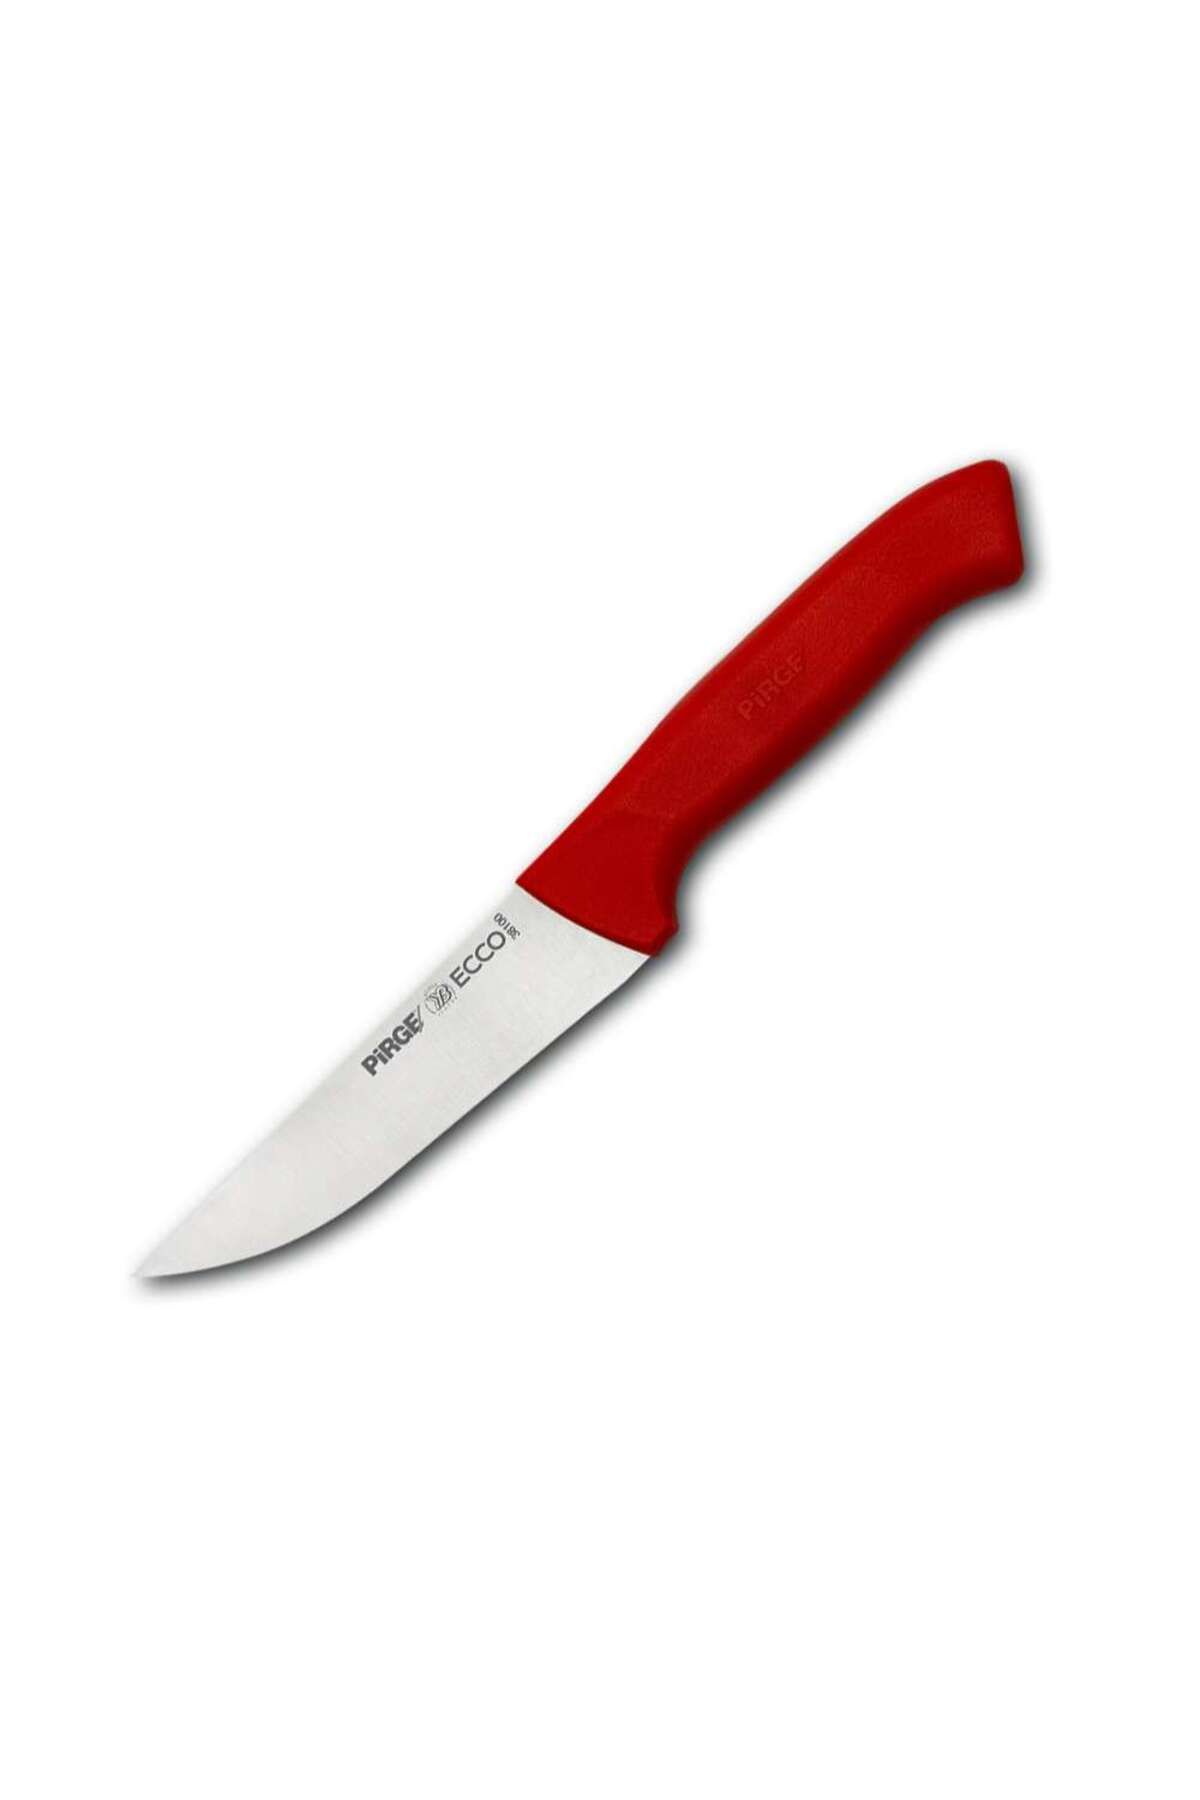 Pirge Ecco Kasap Bıçağı No.0 12,5 cm KIRMIZI - 38100